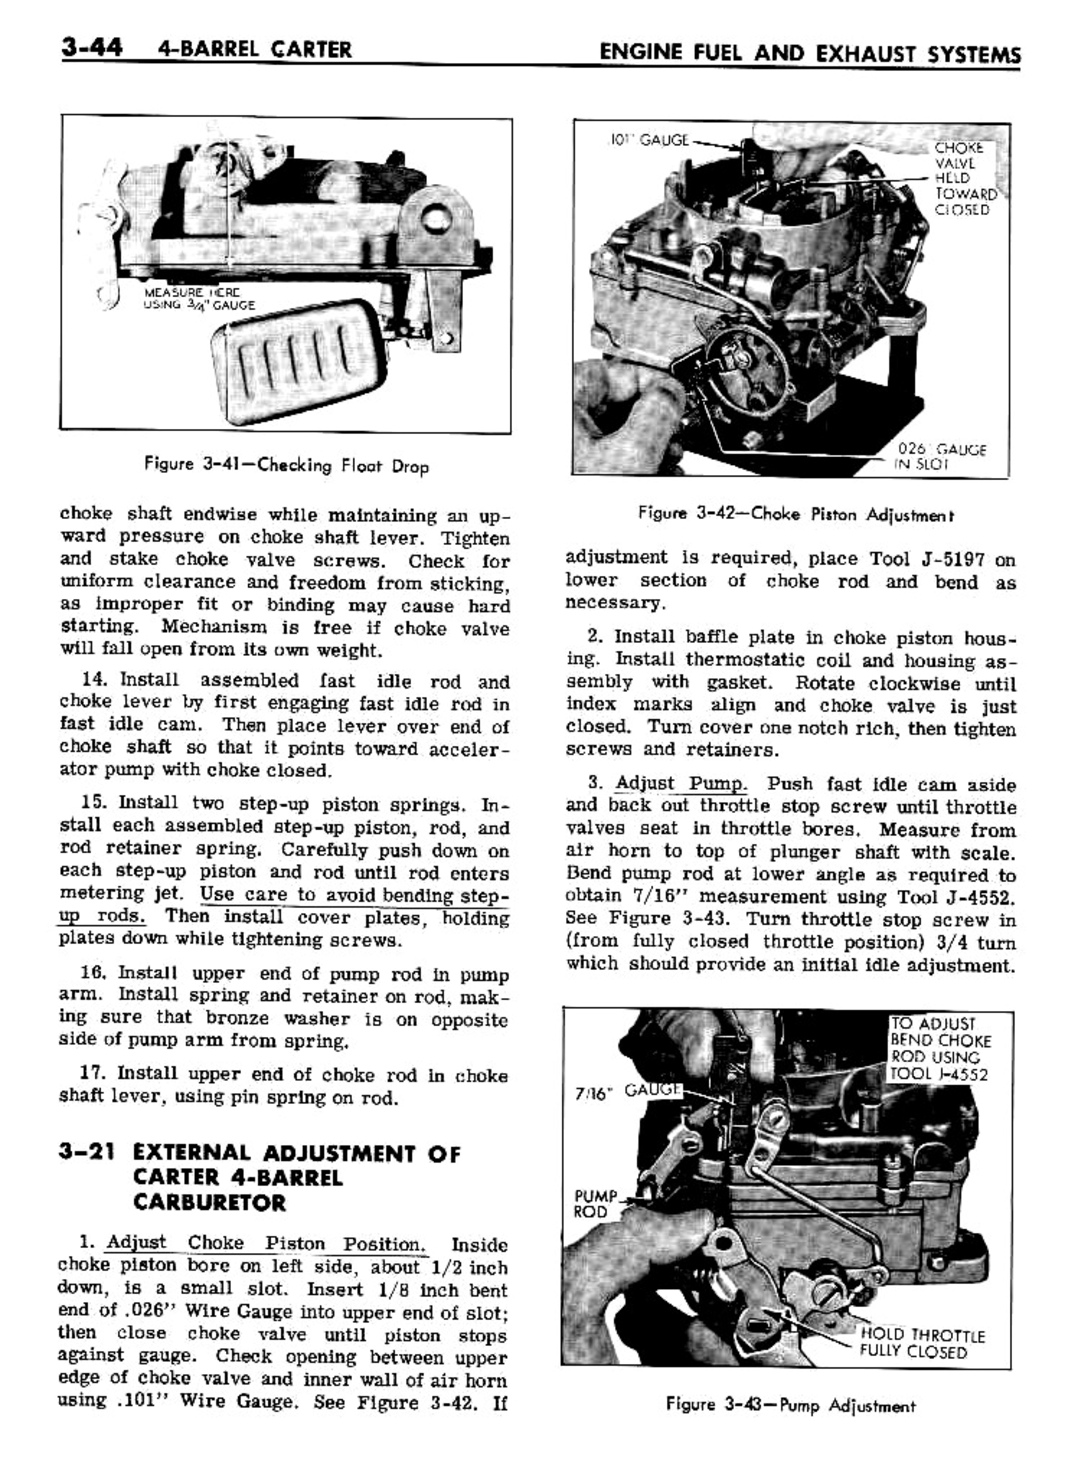 n_04 1961 Buick Shop Manual - Engine Fuel & Exhaust-044-044.jpg